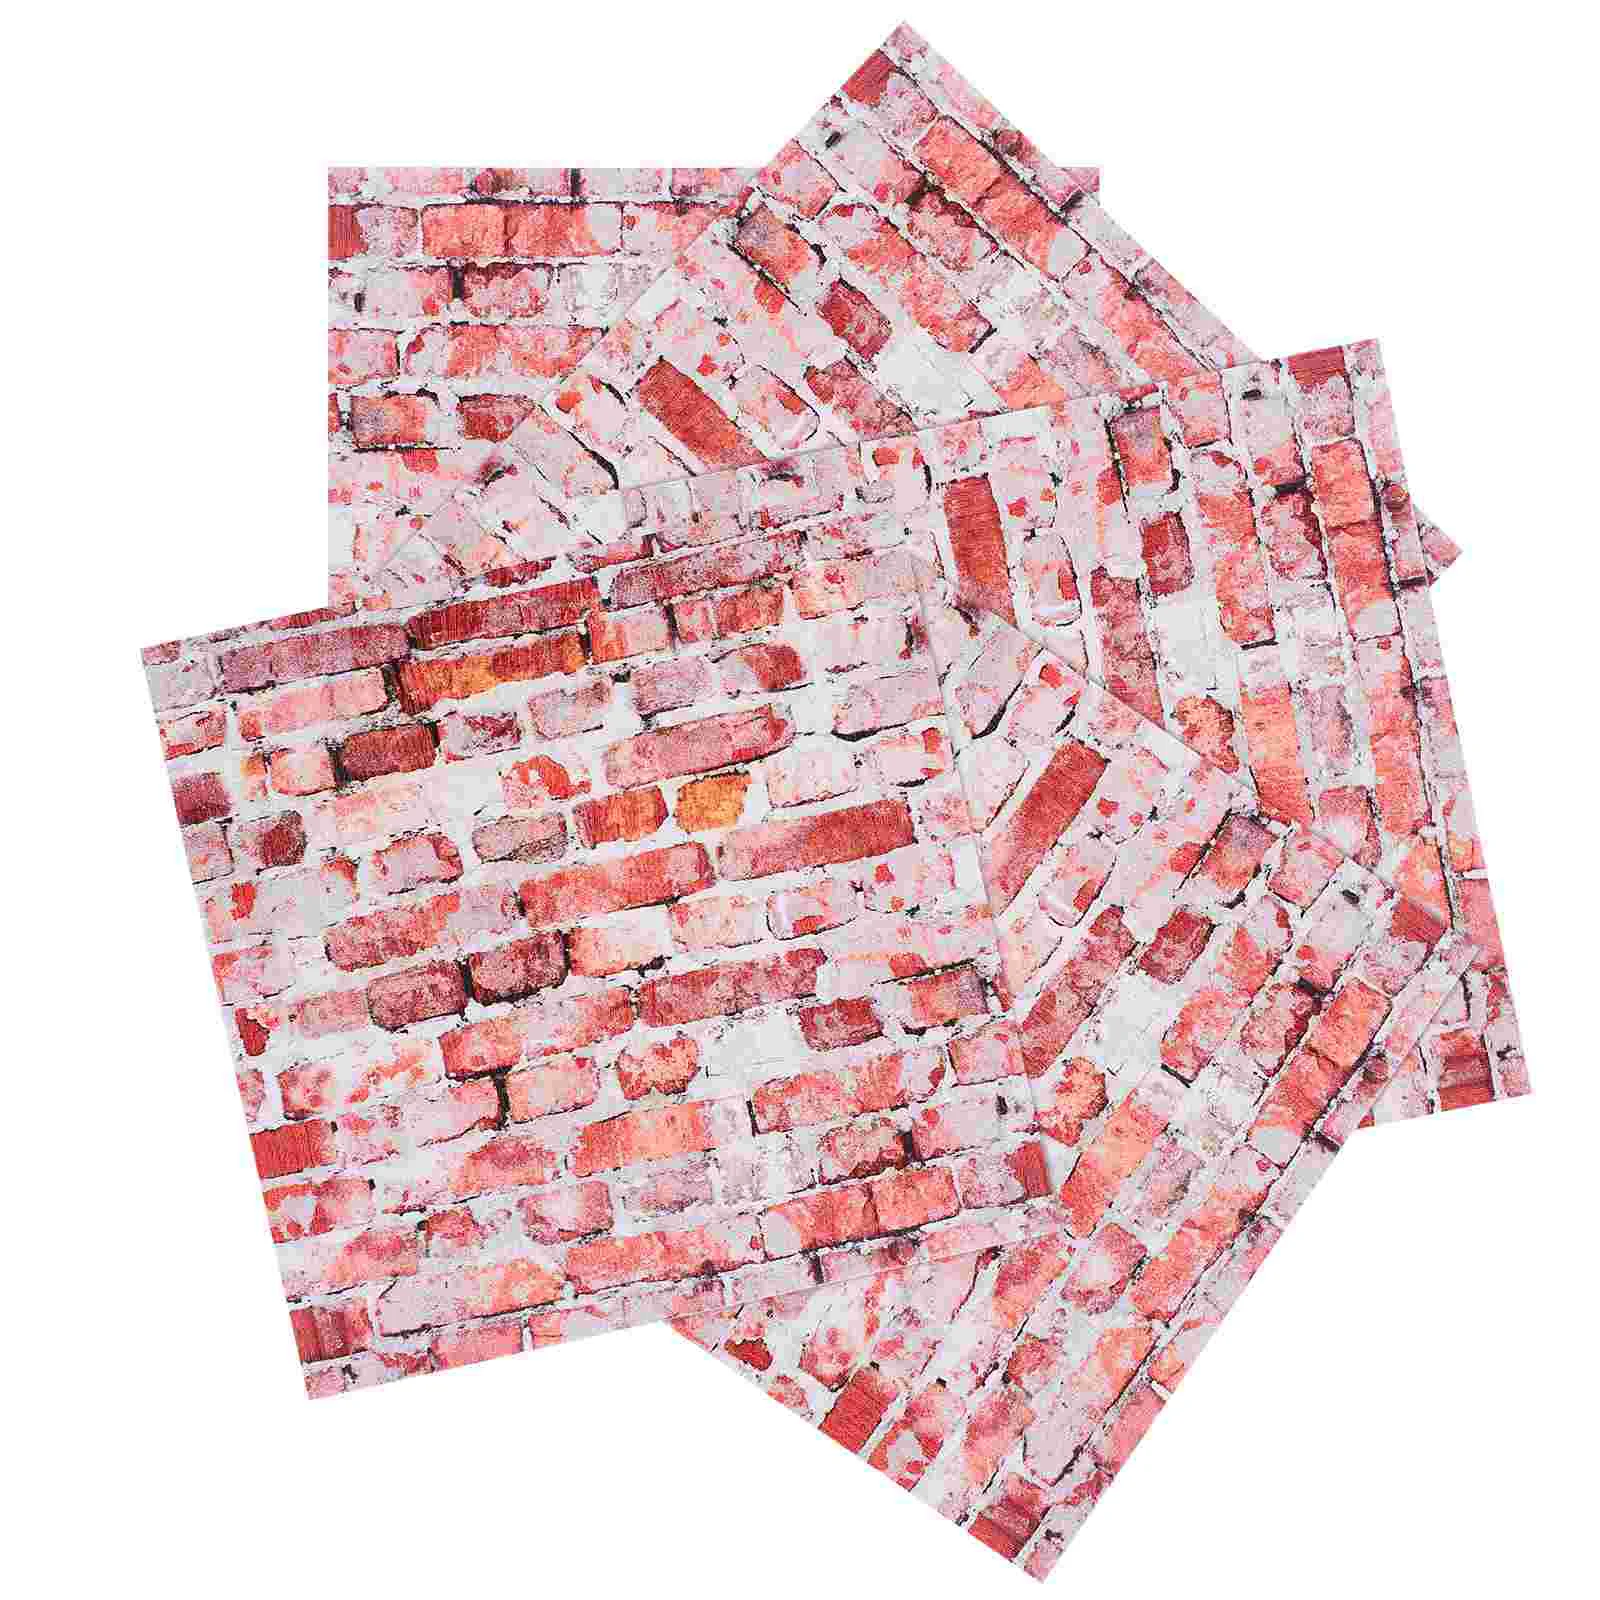 5 Pcs House Tile Wall Sticker Mini Paper Peel and Miniature Accessories Wallpaper Stickers Decor